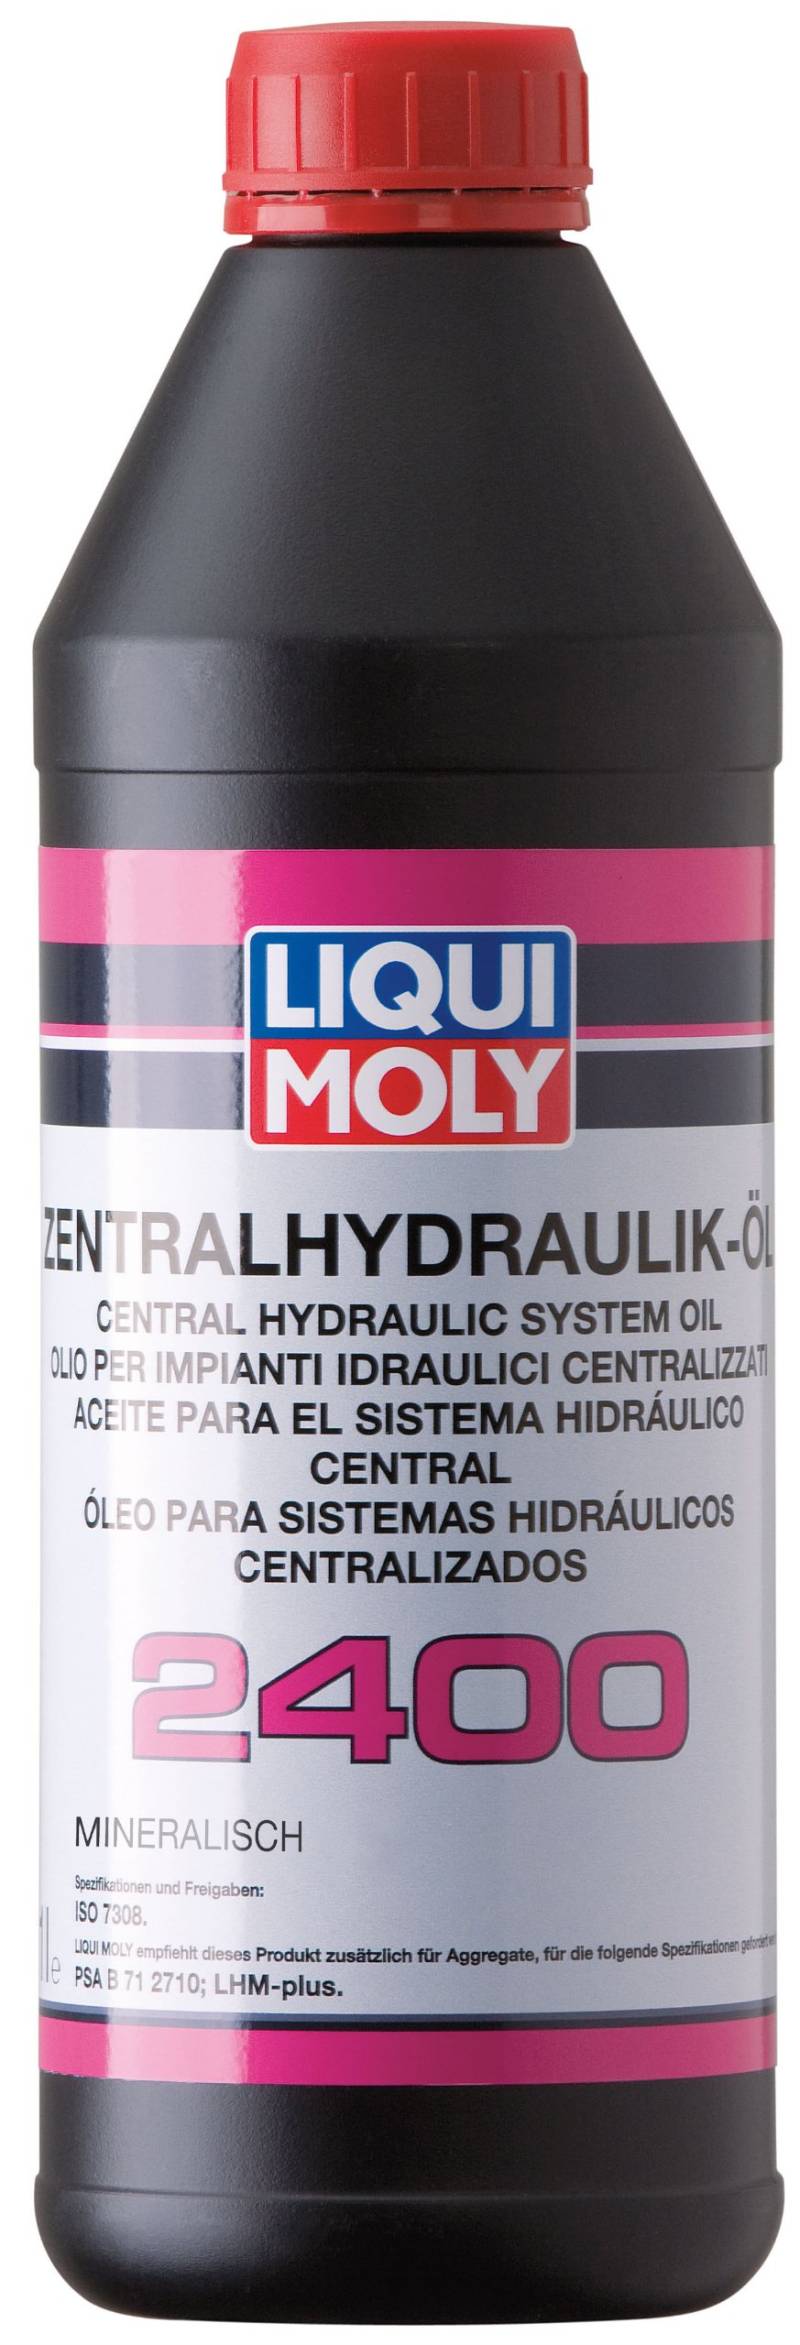 LIQUI MOLY Zentralhydrauliköl 2400 | 1 L | Hydrauliköl | Art.-Nr.: 3666 von Liqui Moly